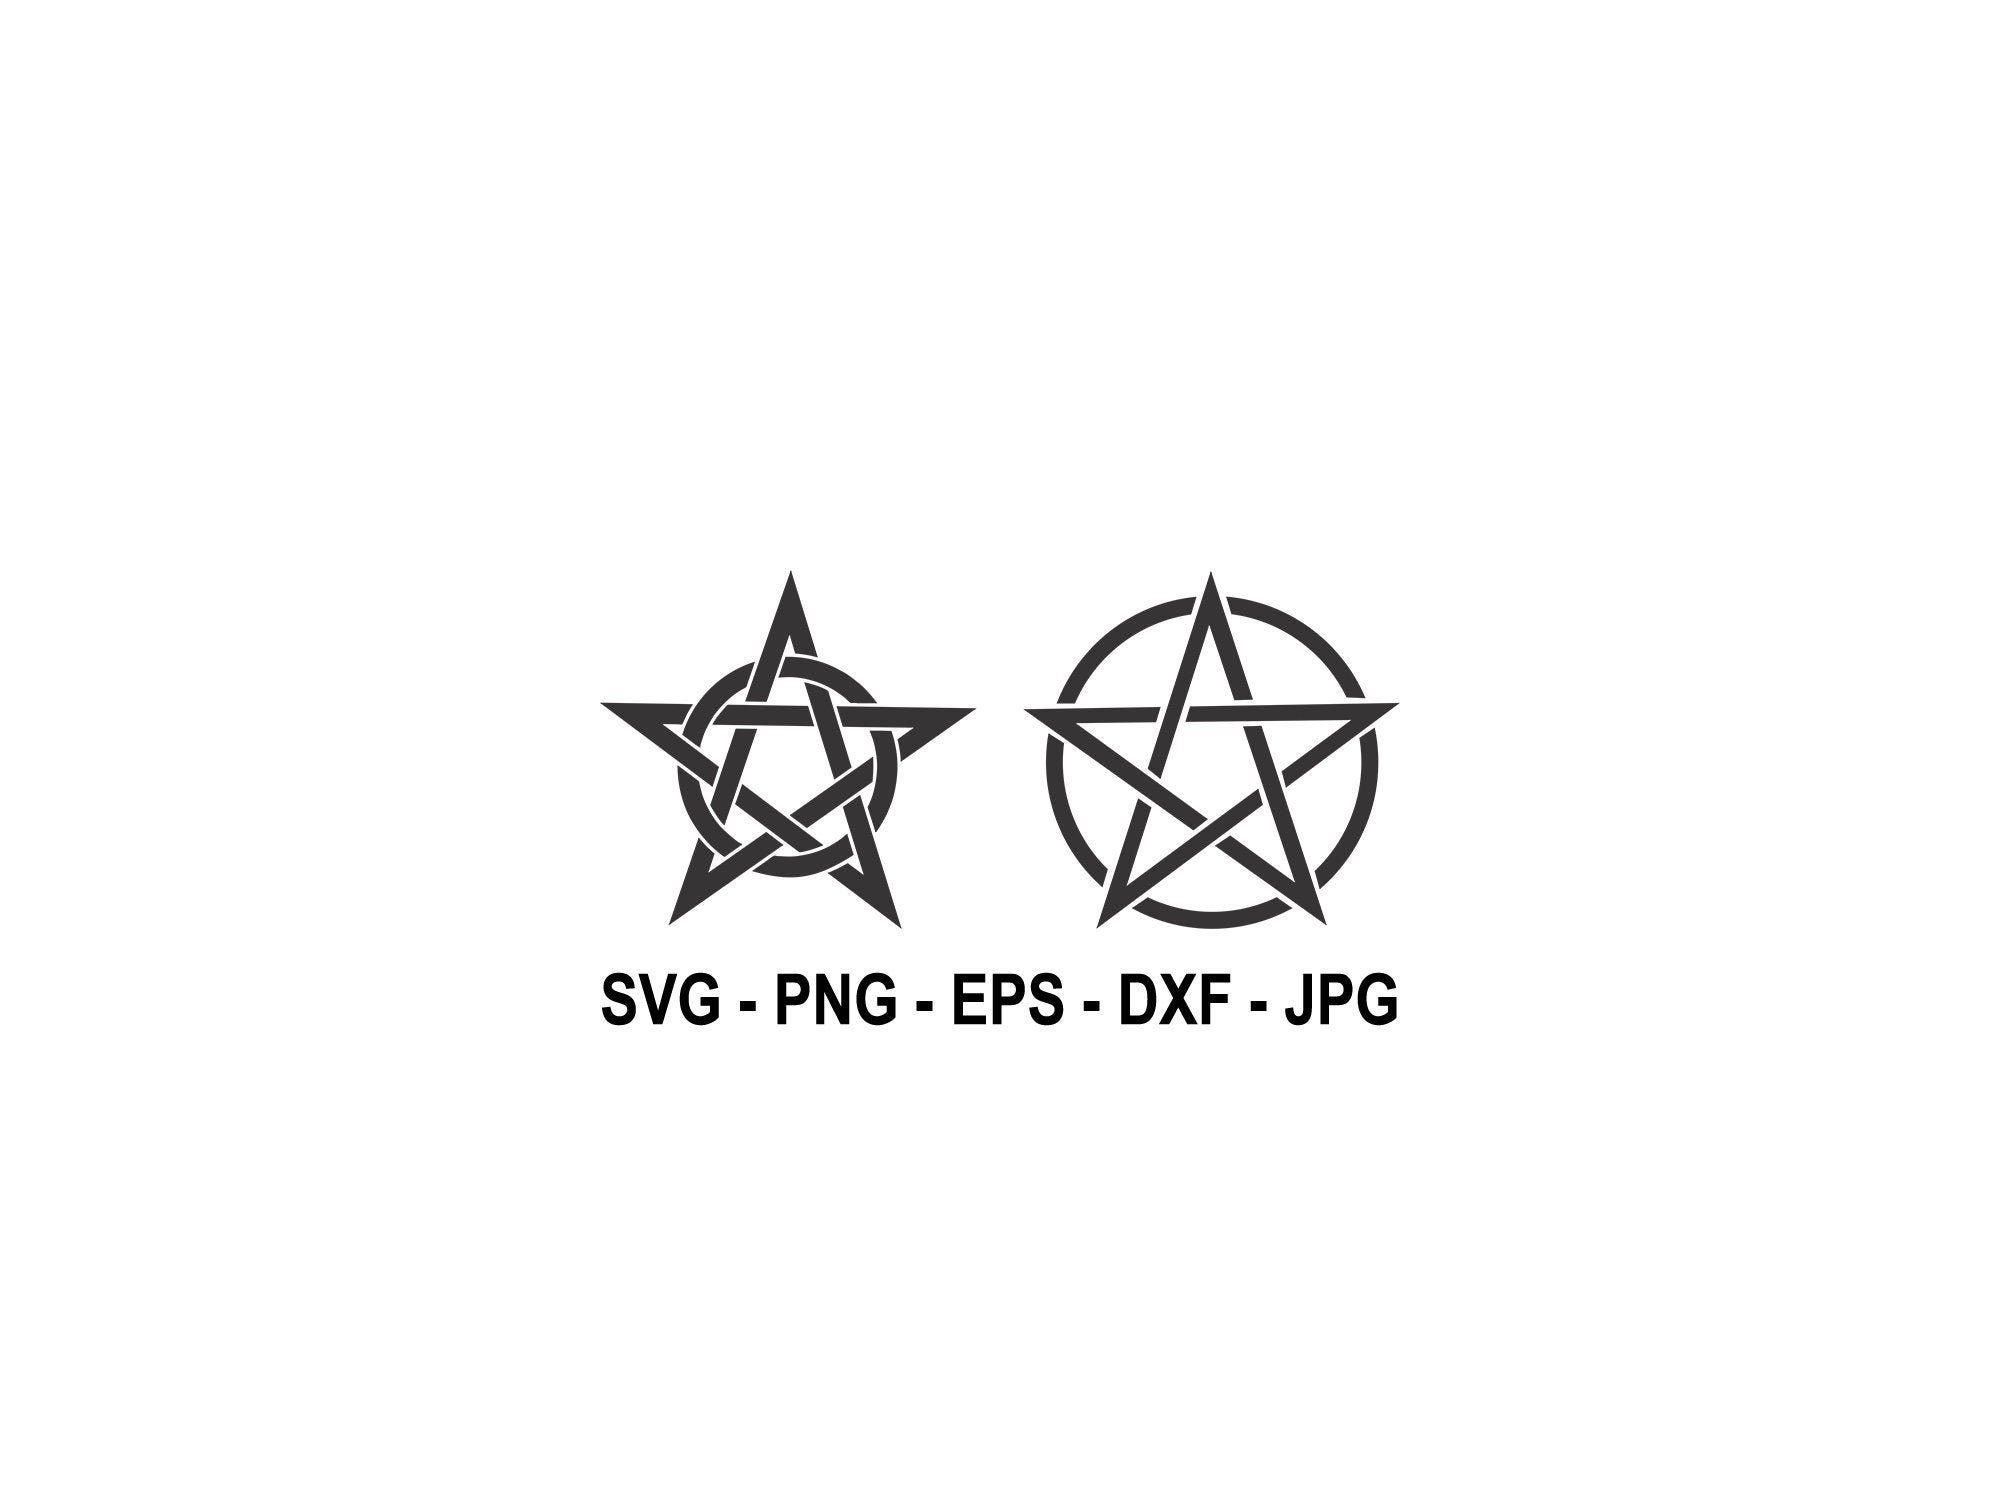 5 point star symbol